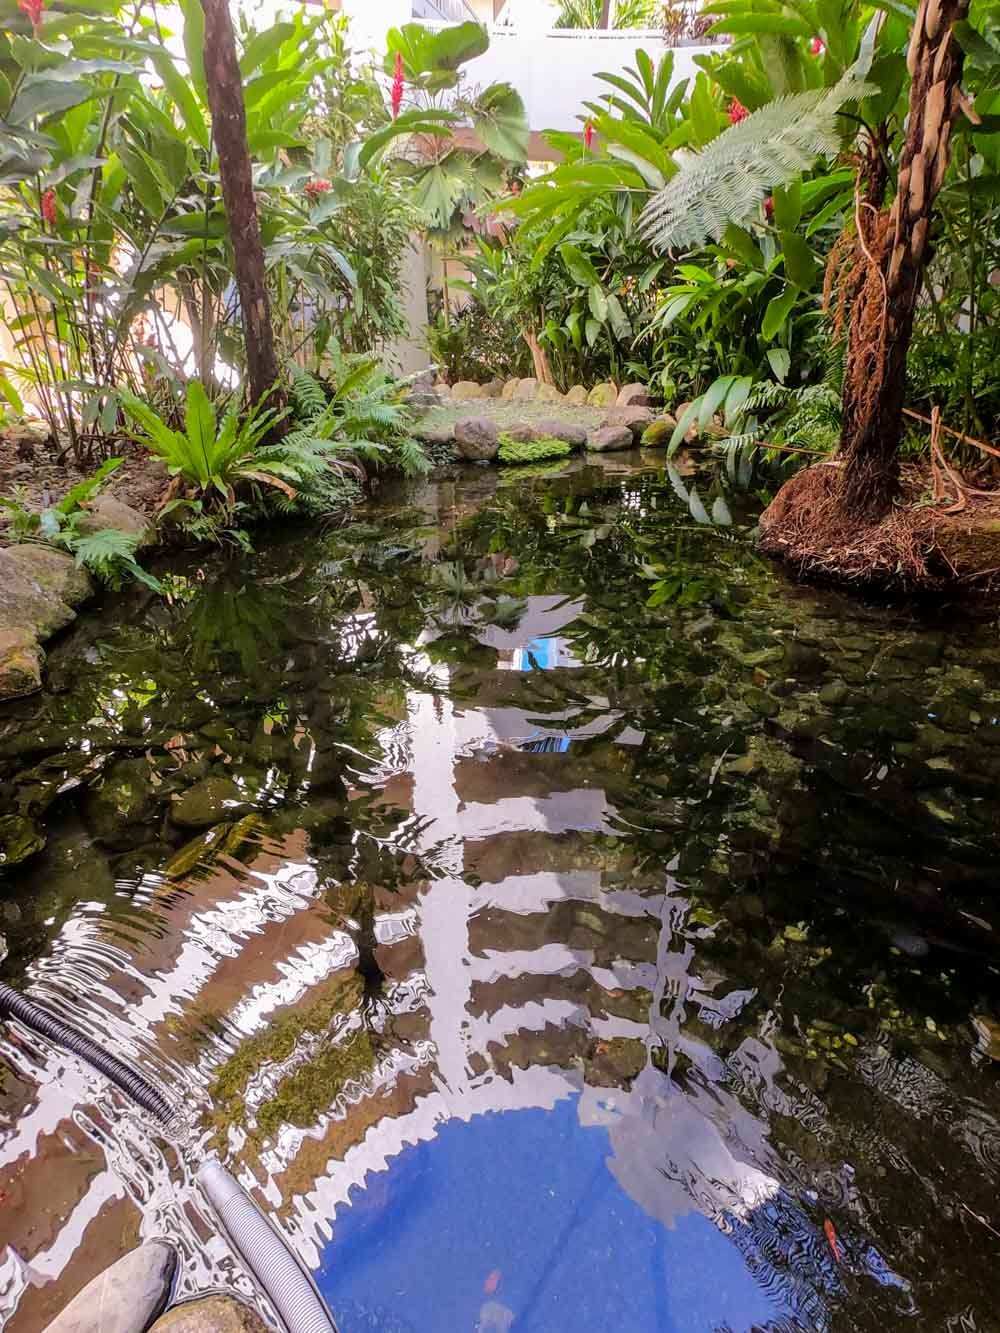 The barramundi ponds are part of the rainforest setting